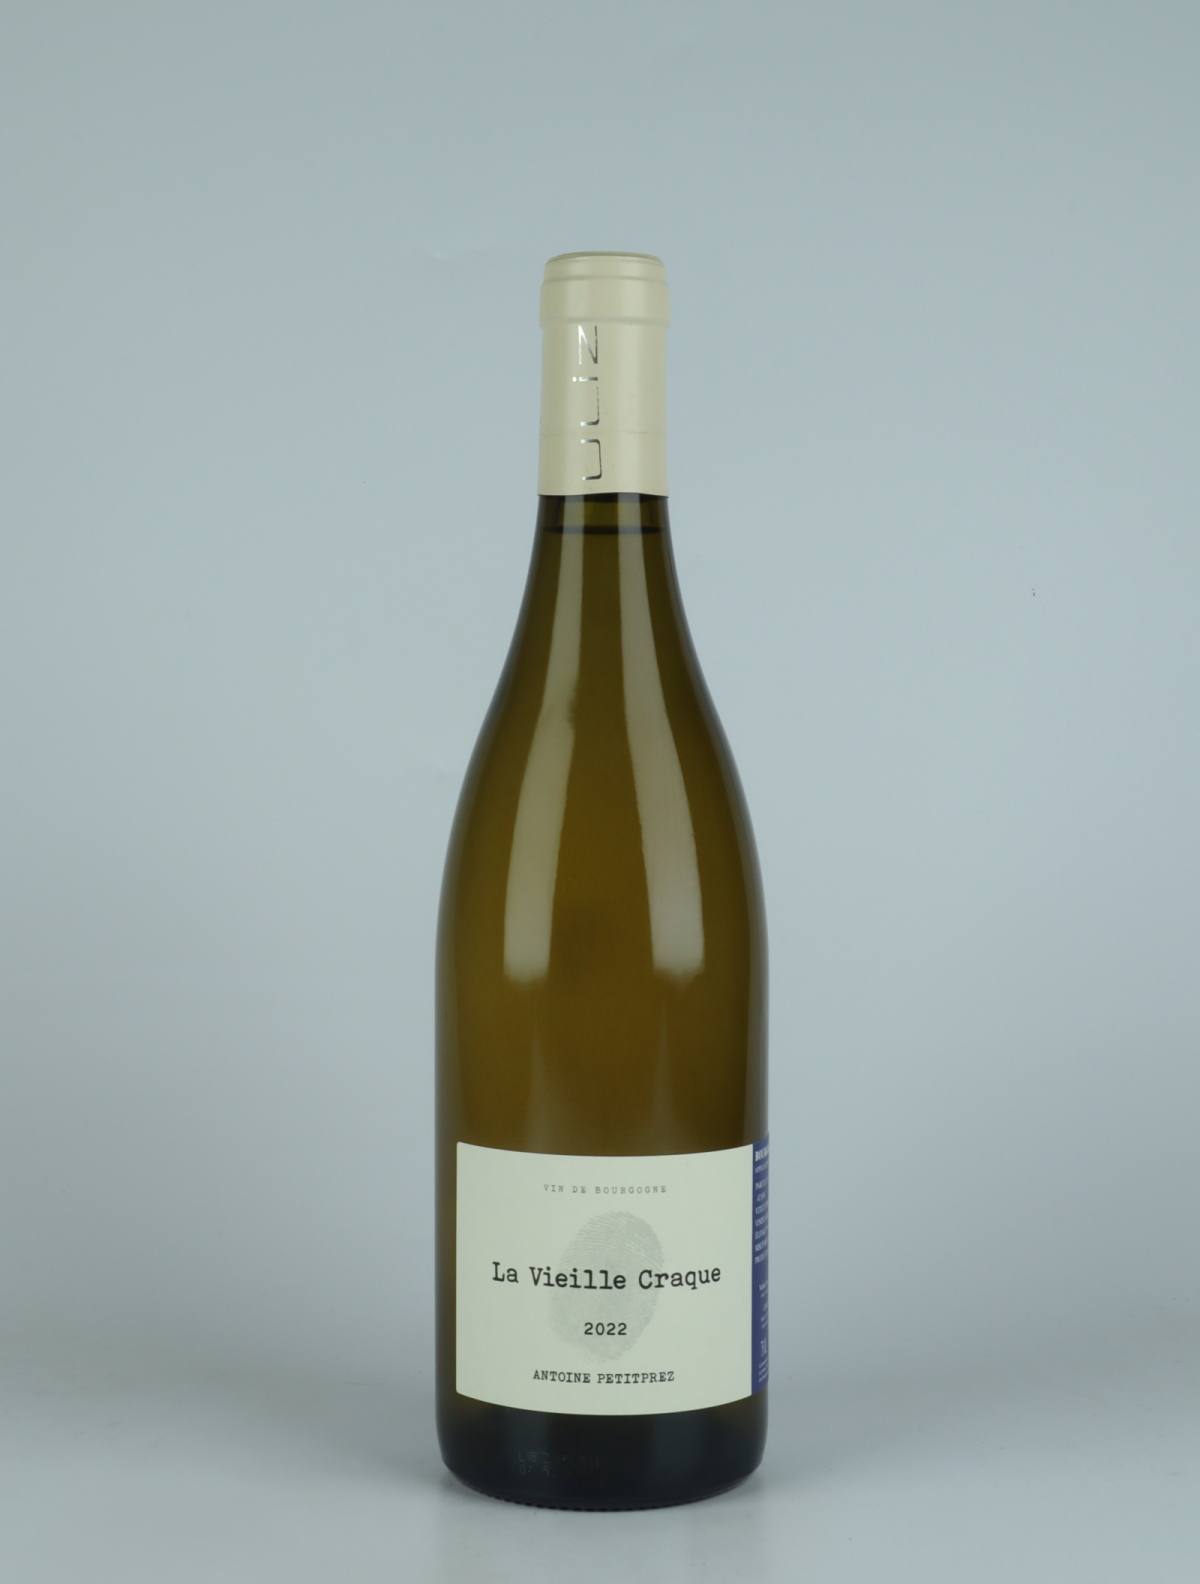 A bottle 2022 Bourgogne Aligoté - Vieille Craque White wine from Antoine Petitprez, Burgundy in France